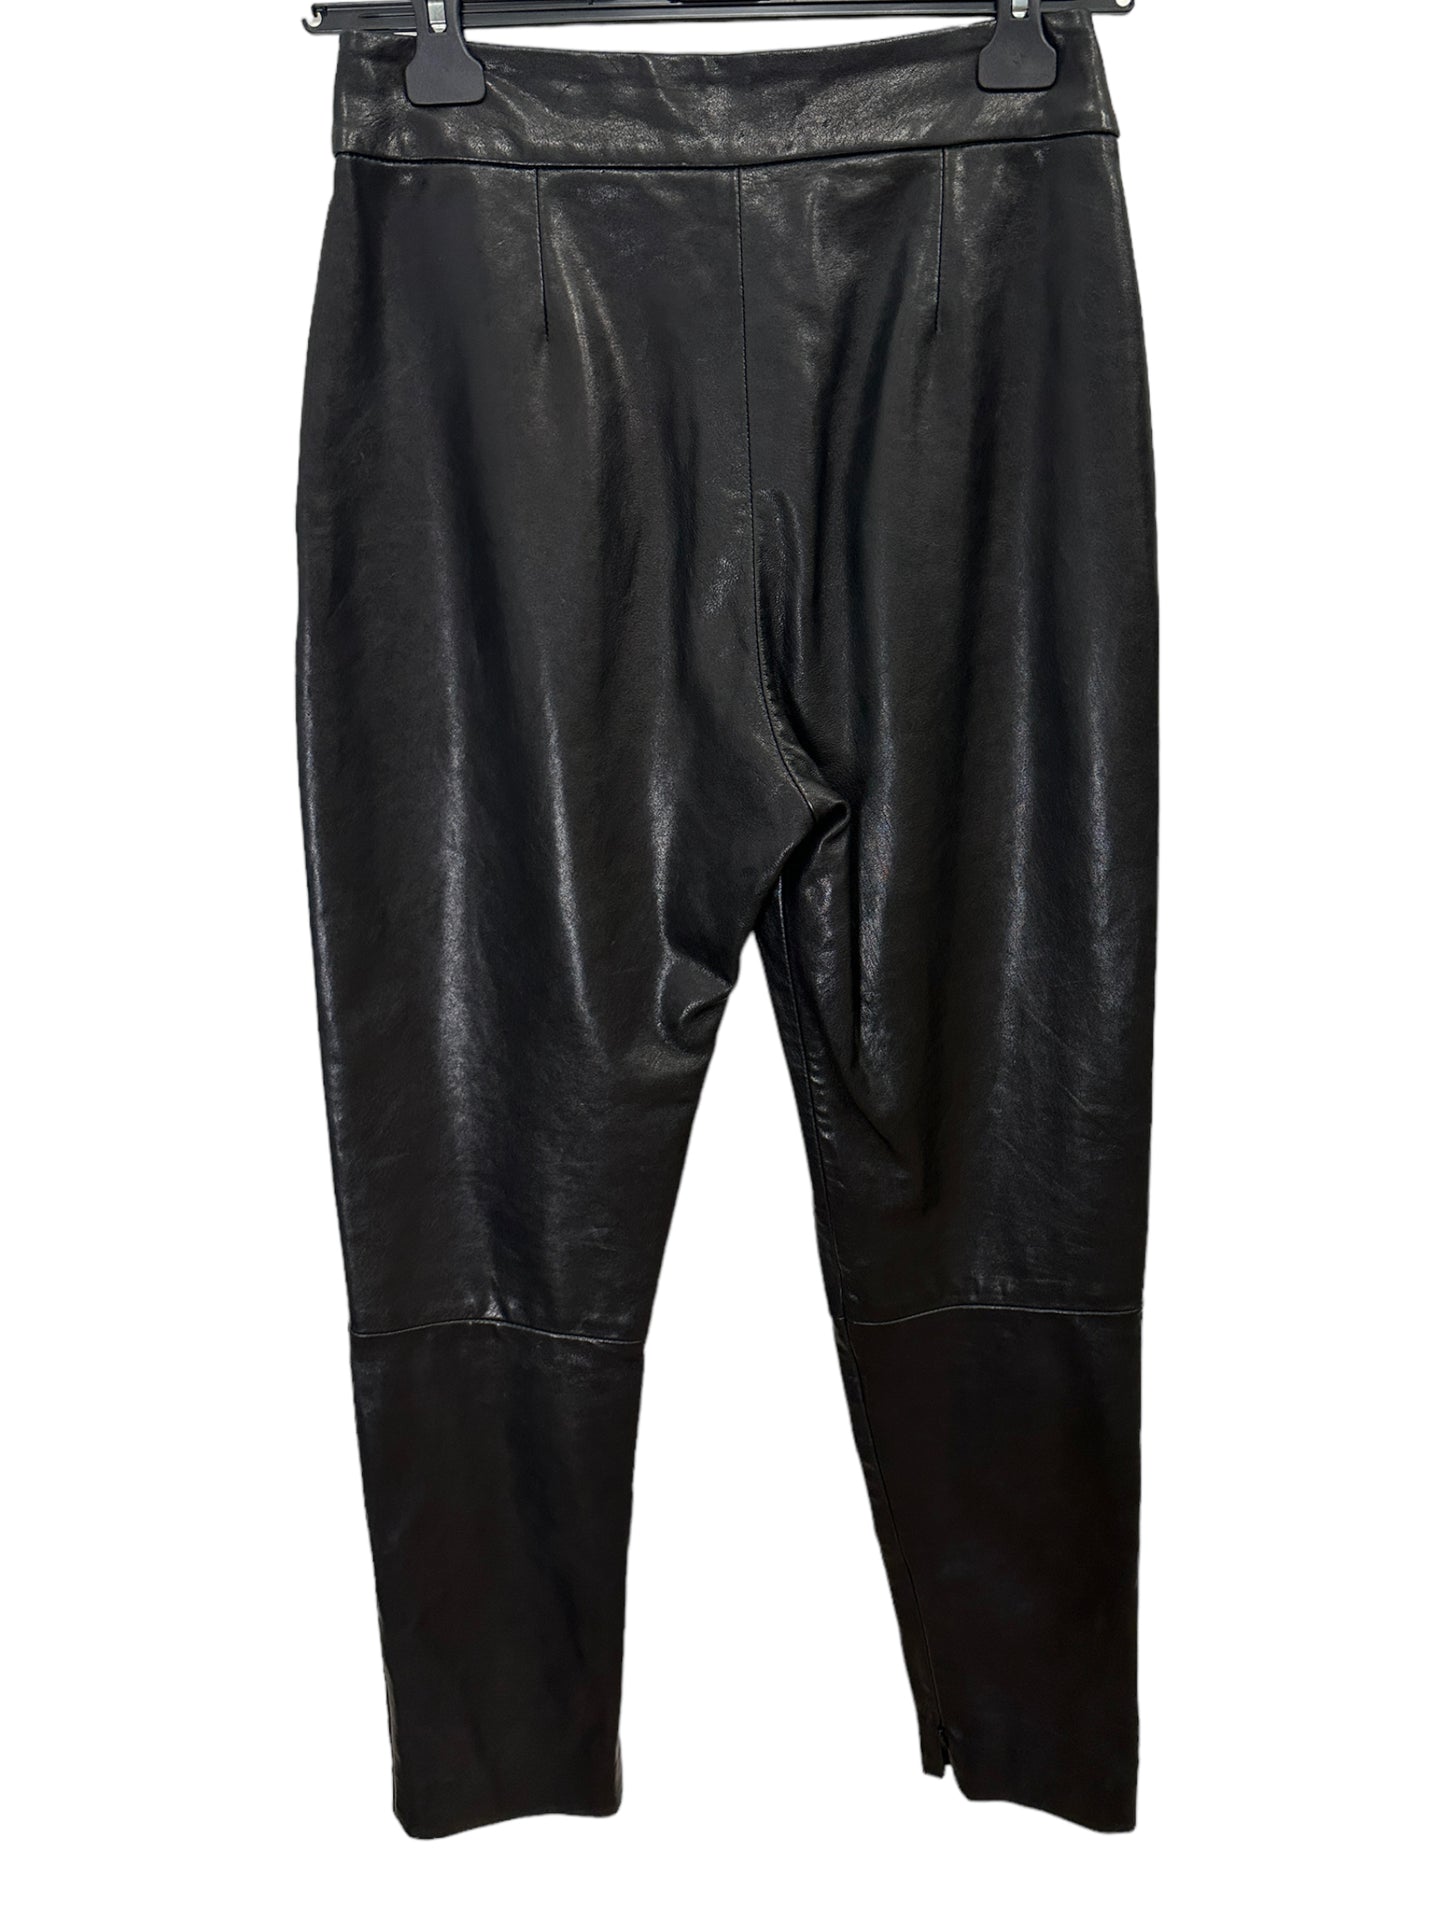 Pritch London - Leathere Pants -  Size UK8-10(US 4-6)